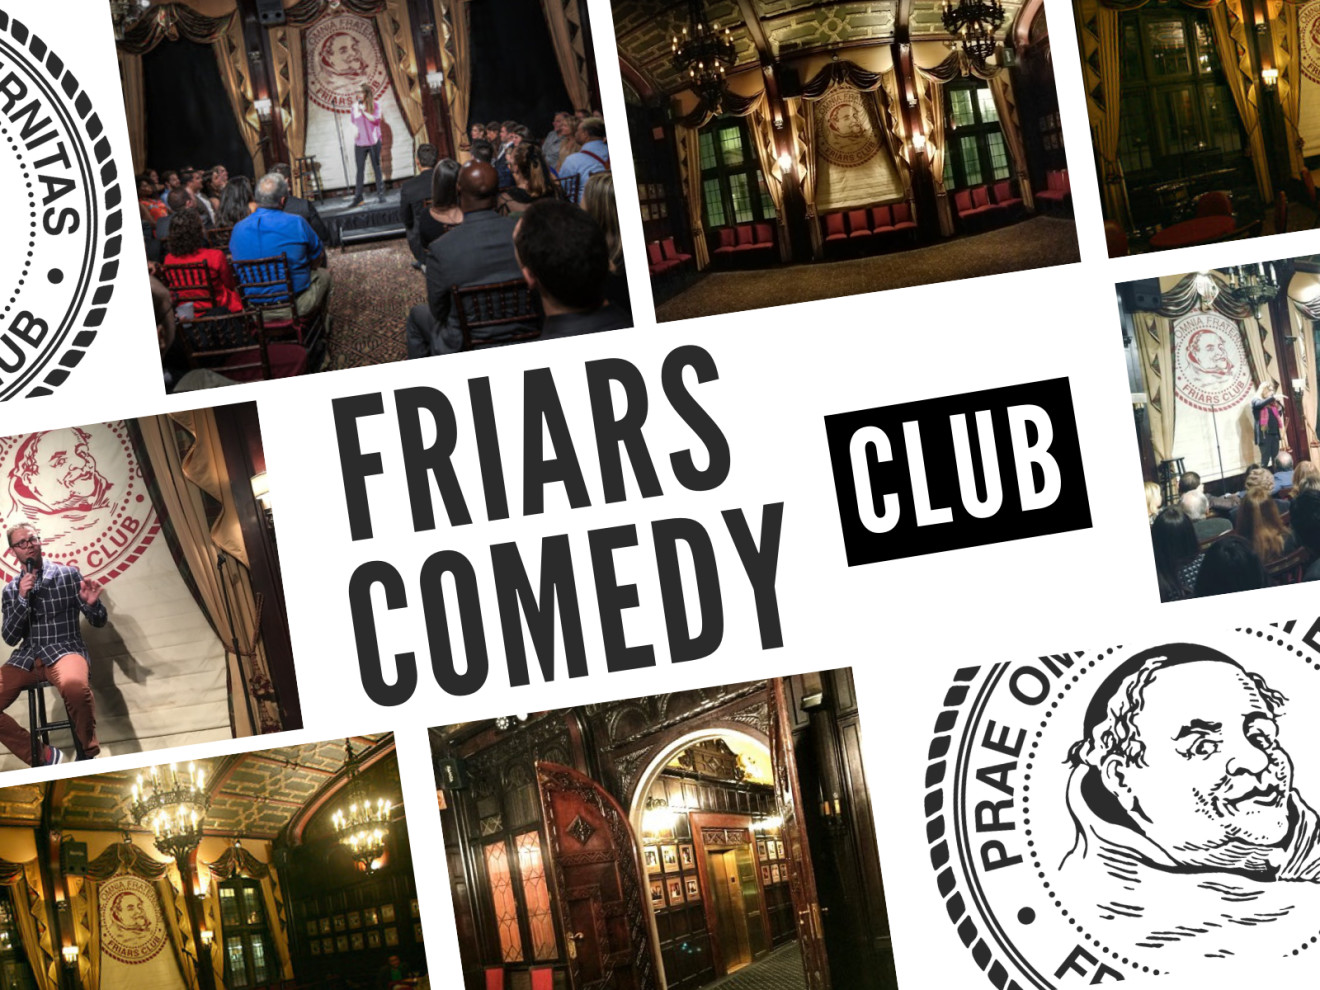 Friars Club Comedy Night